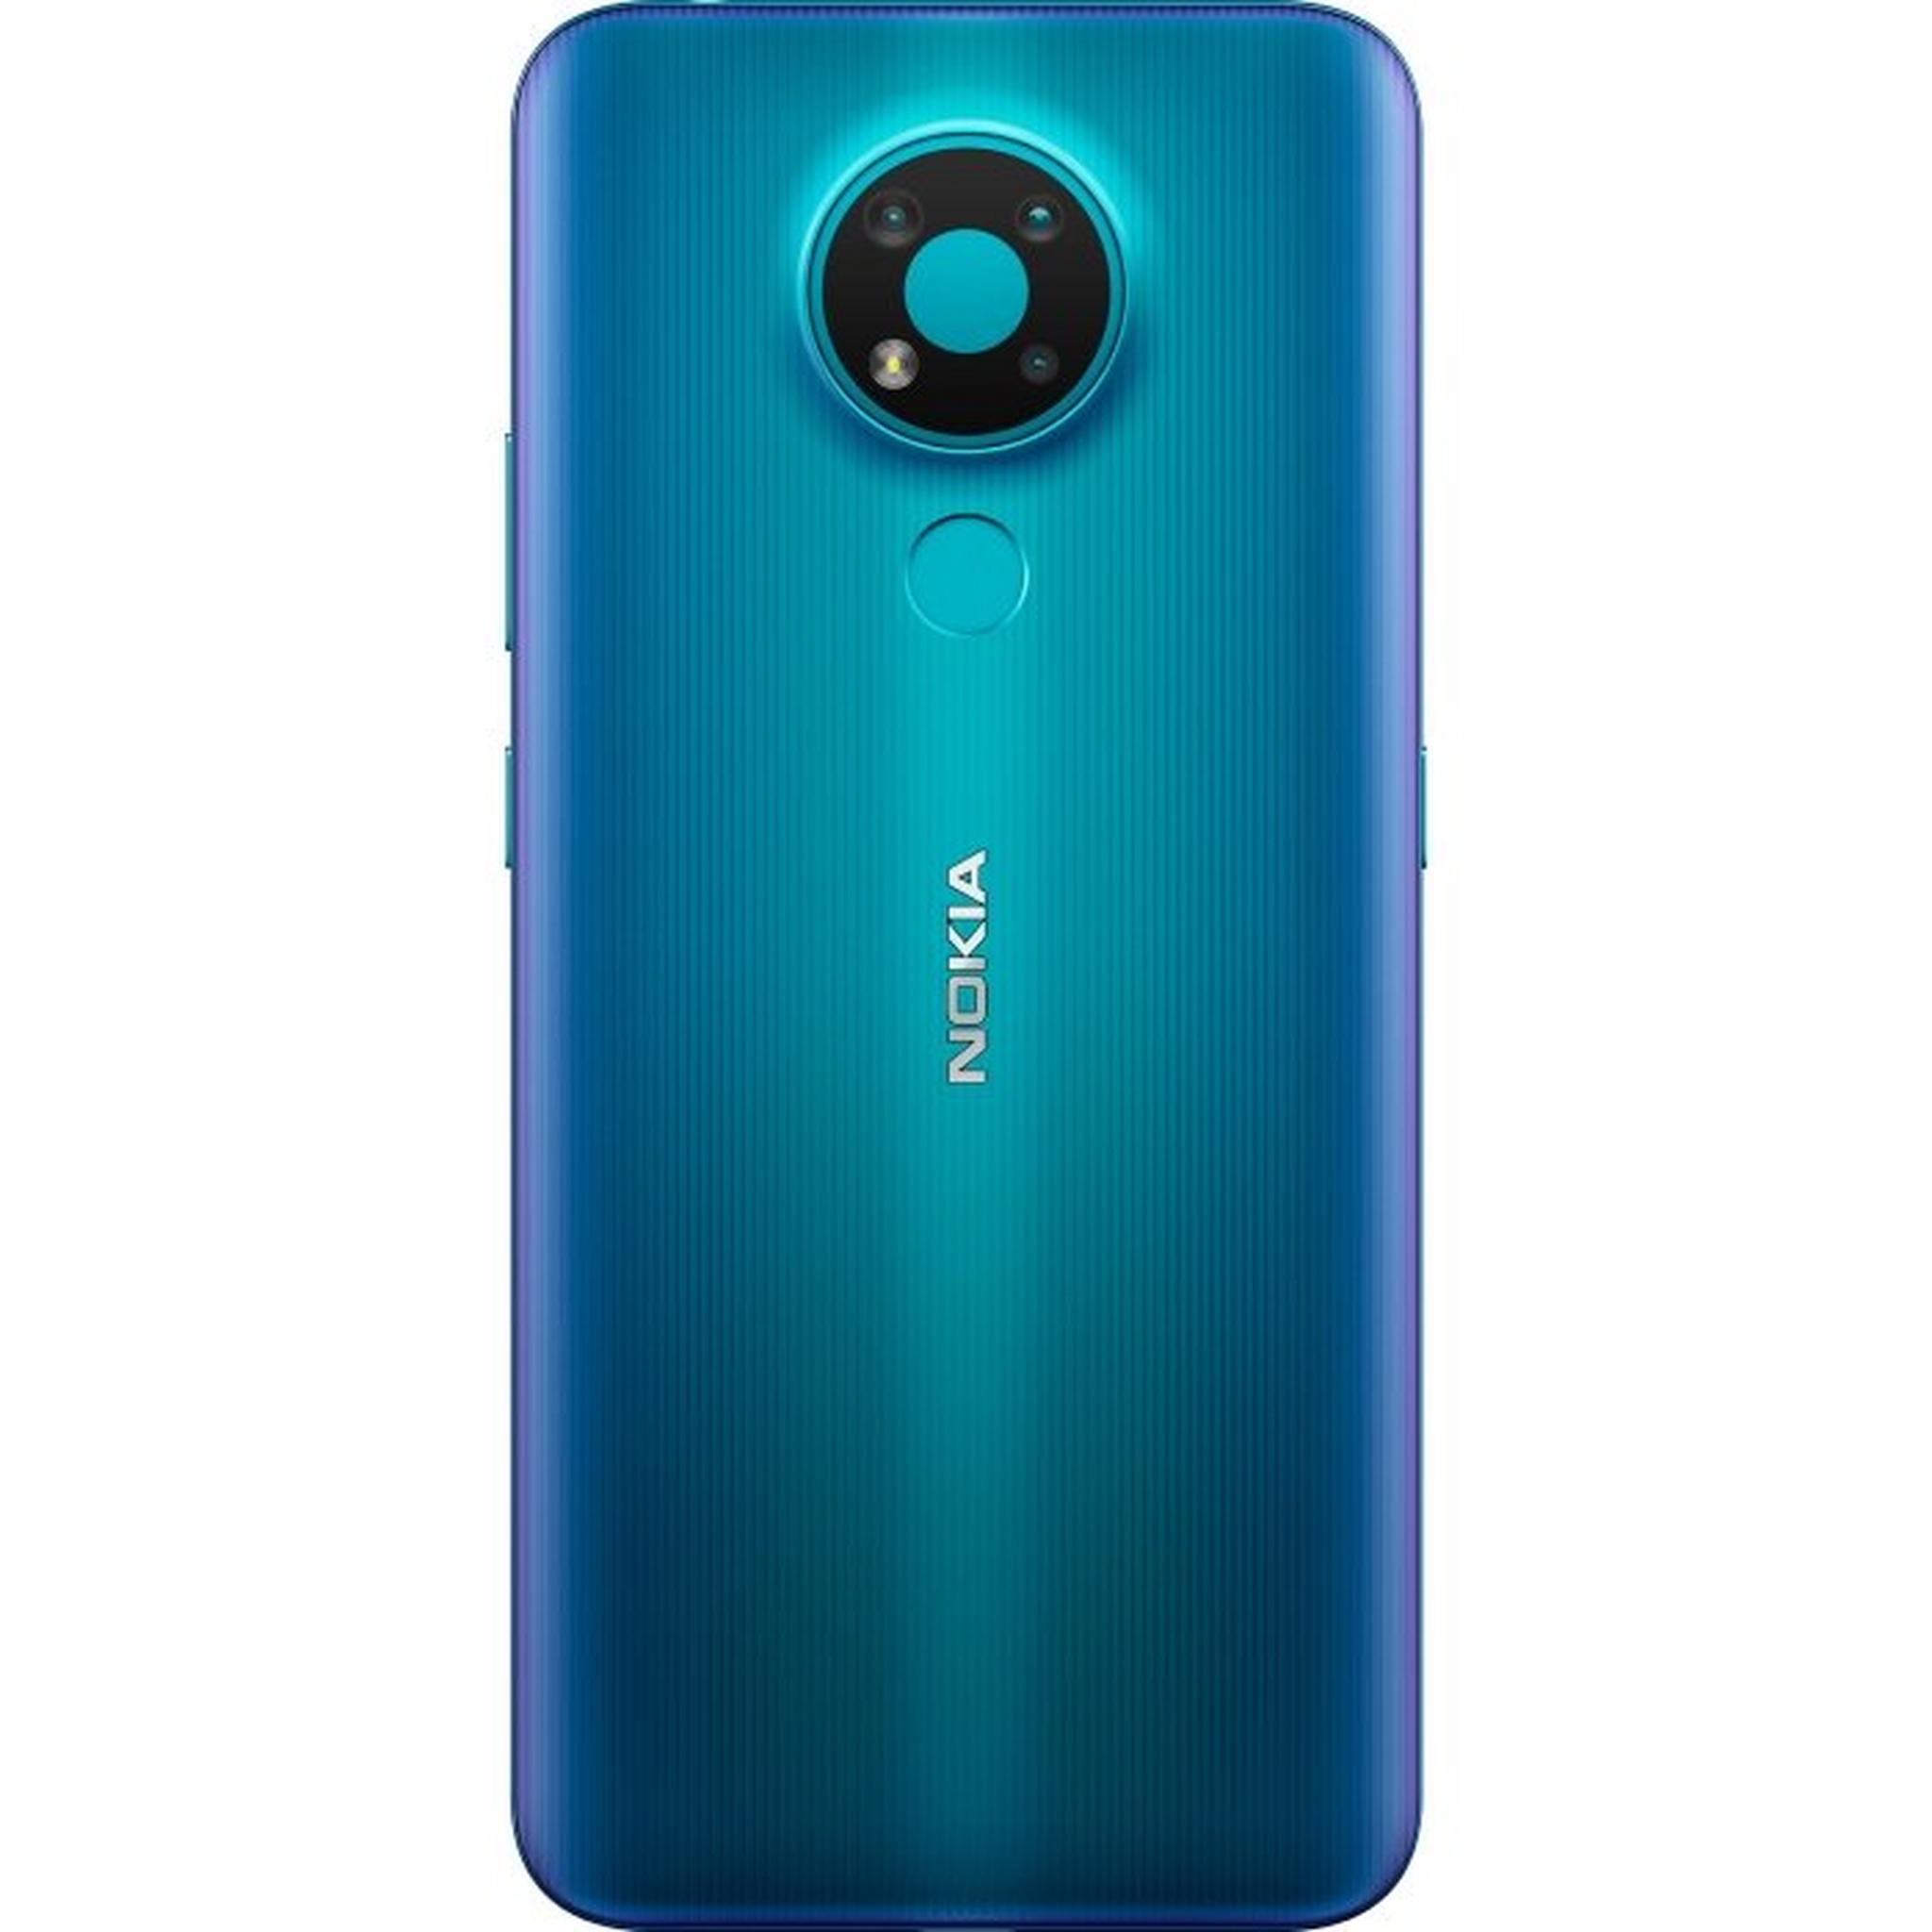 Nokia 3.4 64GB Dual Sim Phone - Blue